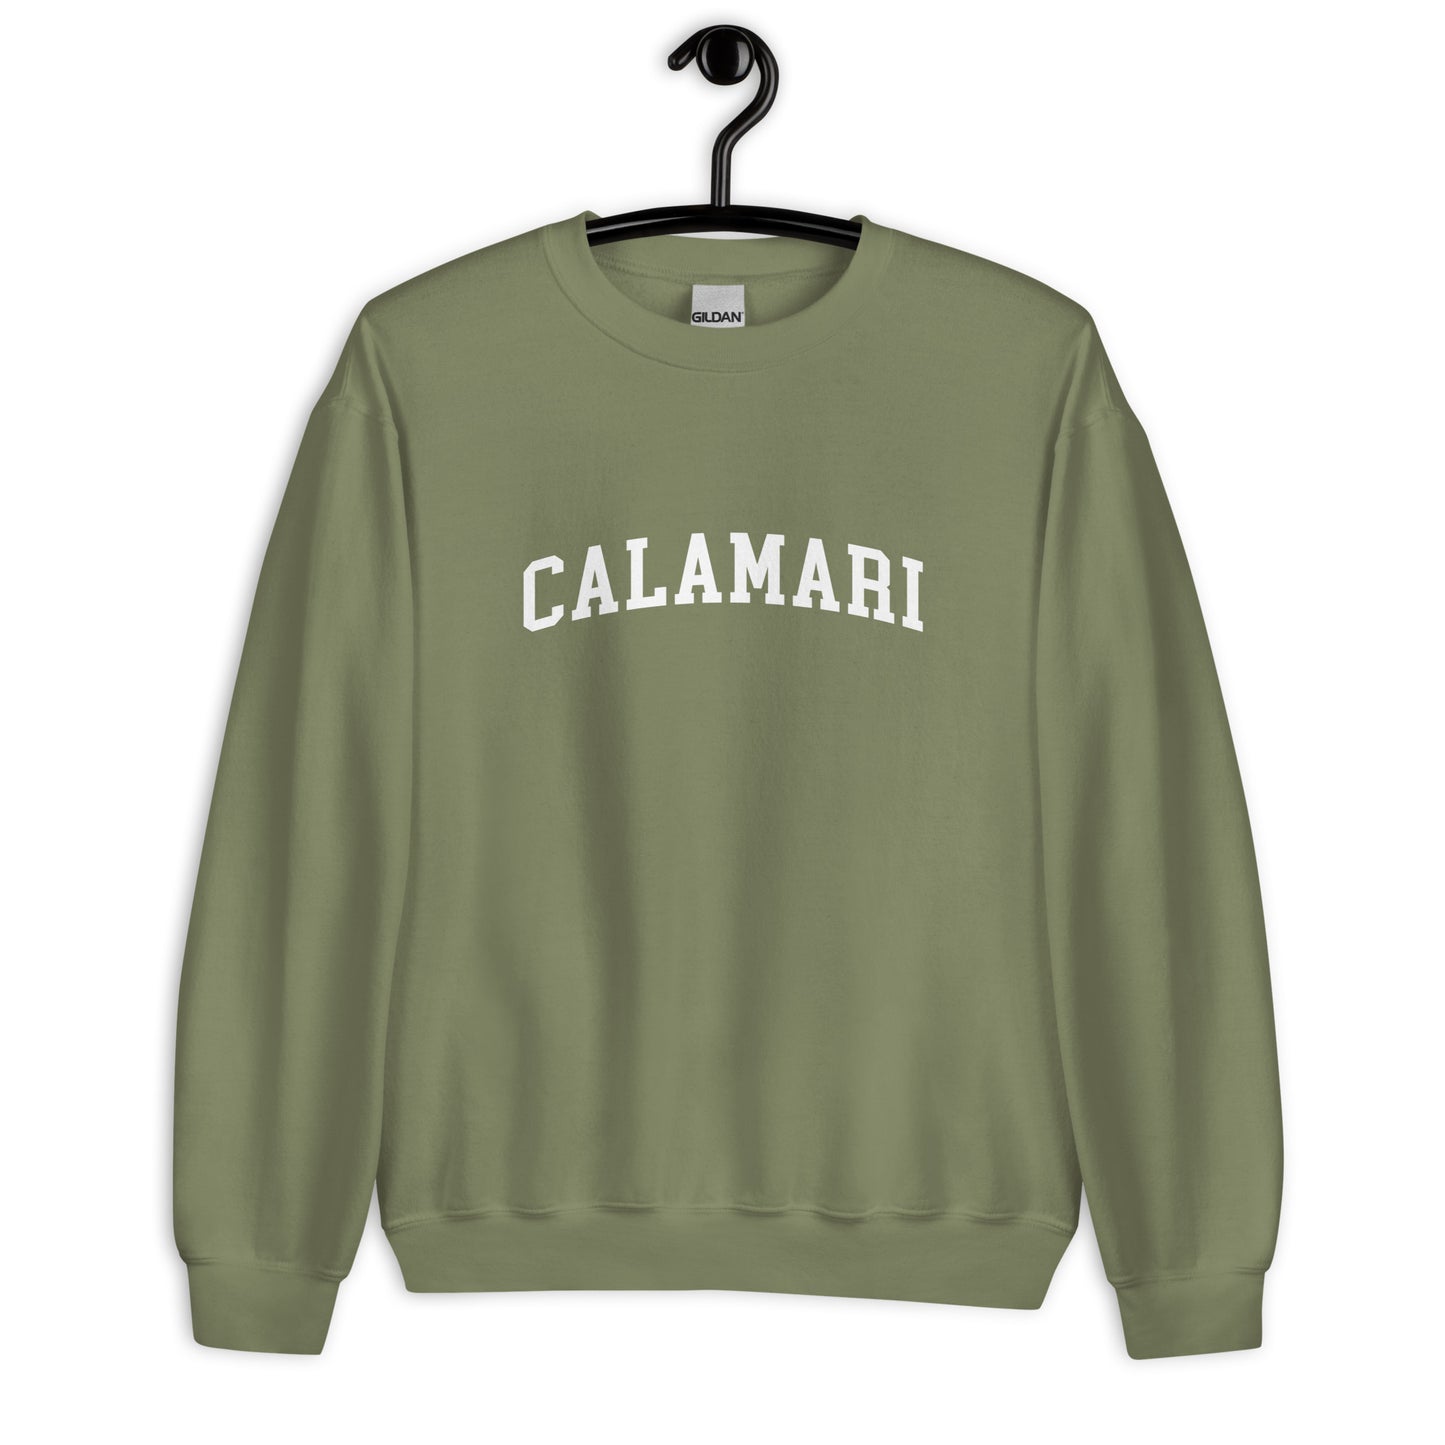 Calamari Sweatshirt - Arched Font